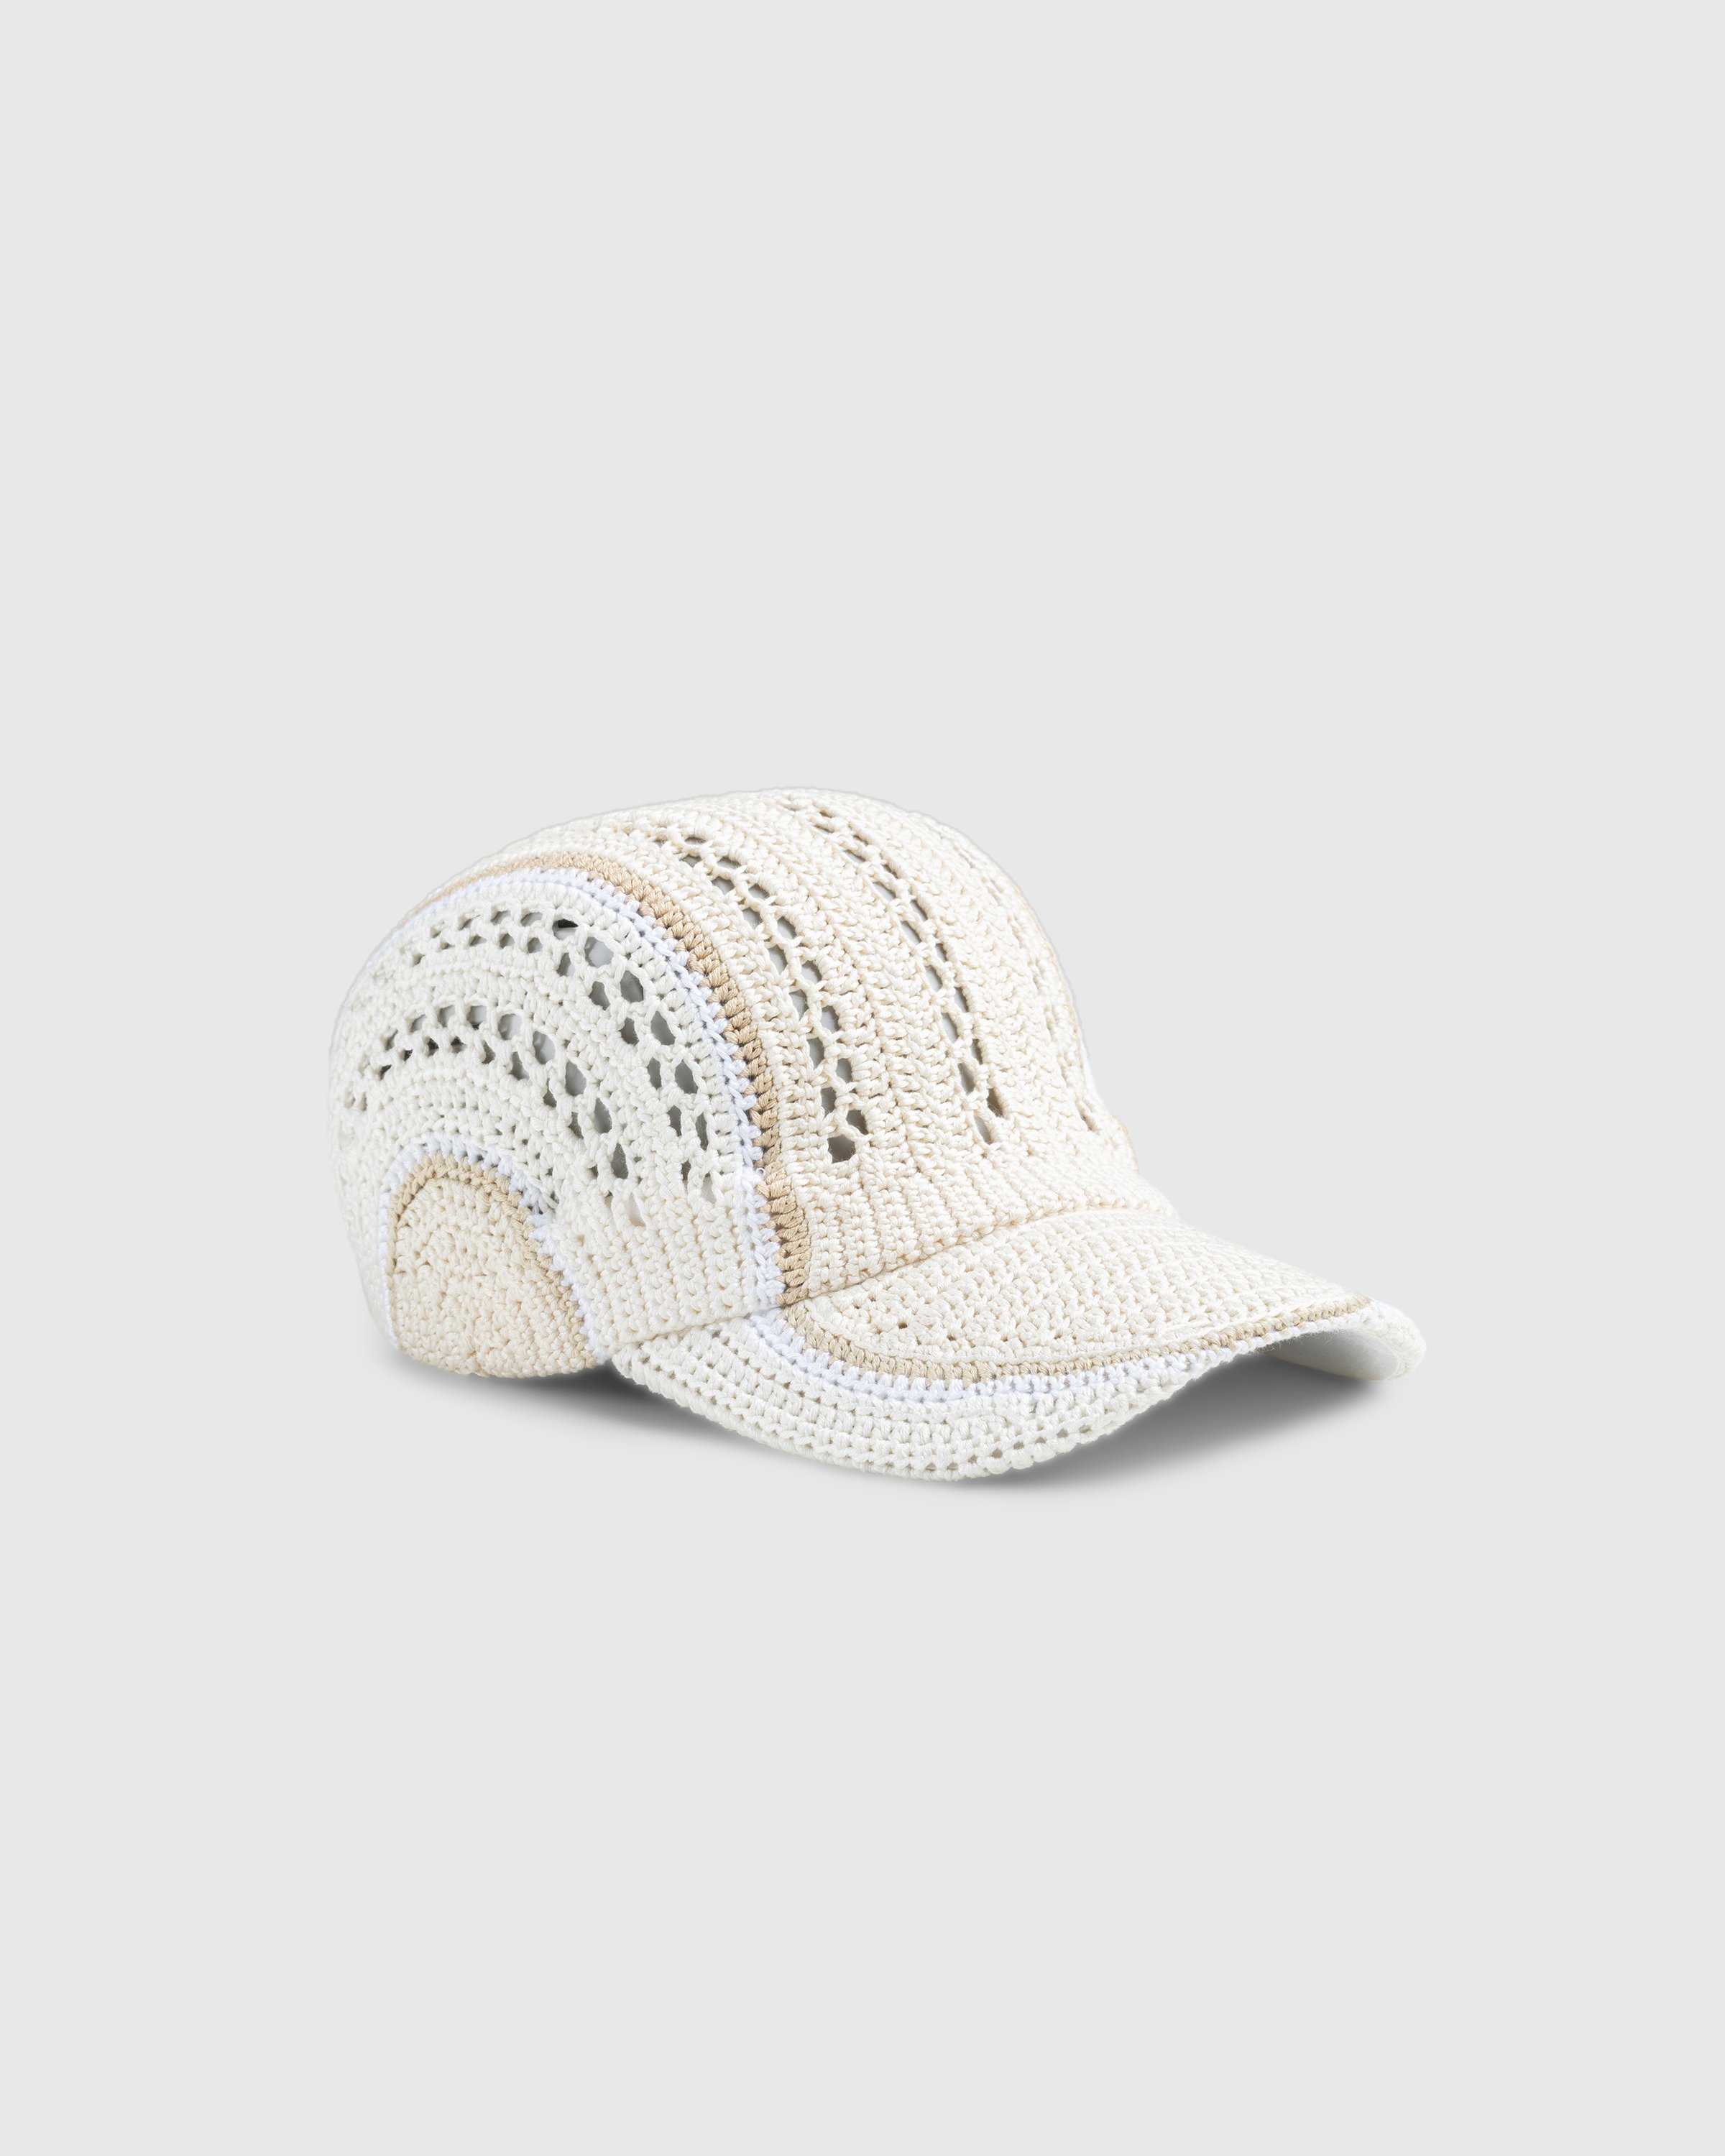 SSU - Crochet Baseball Cap Angel Ivory - Accessories - White - Image 1